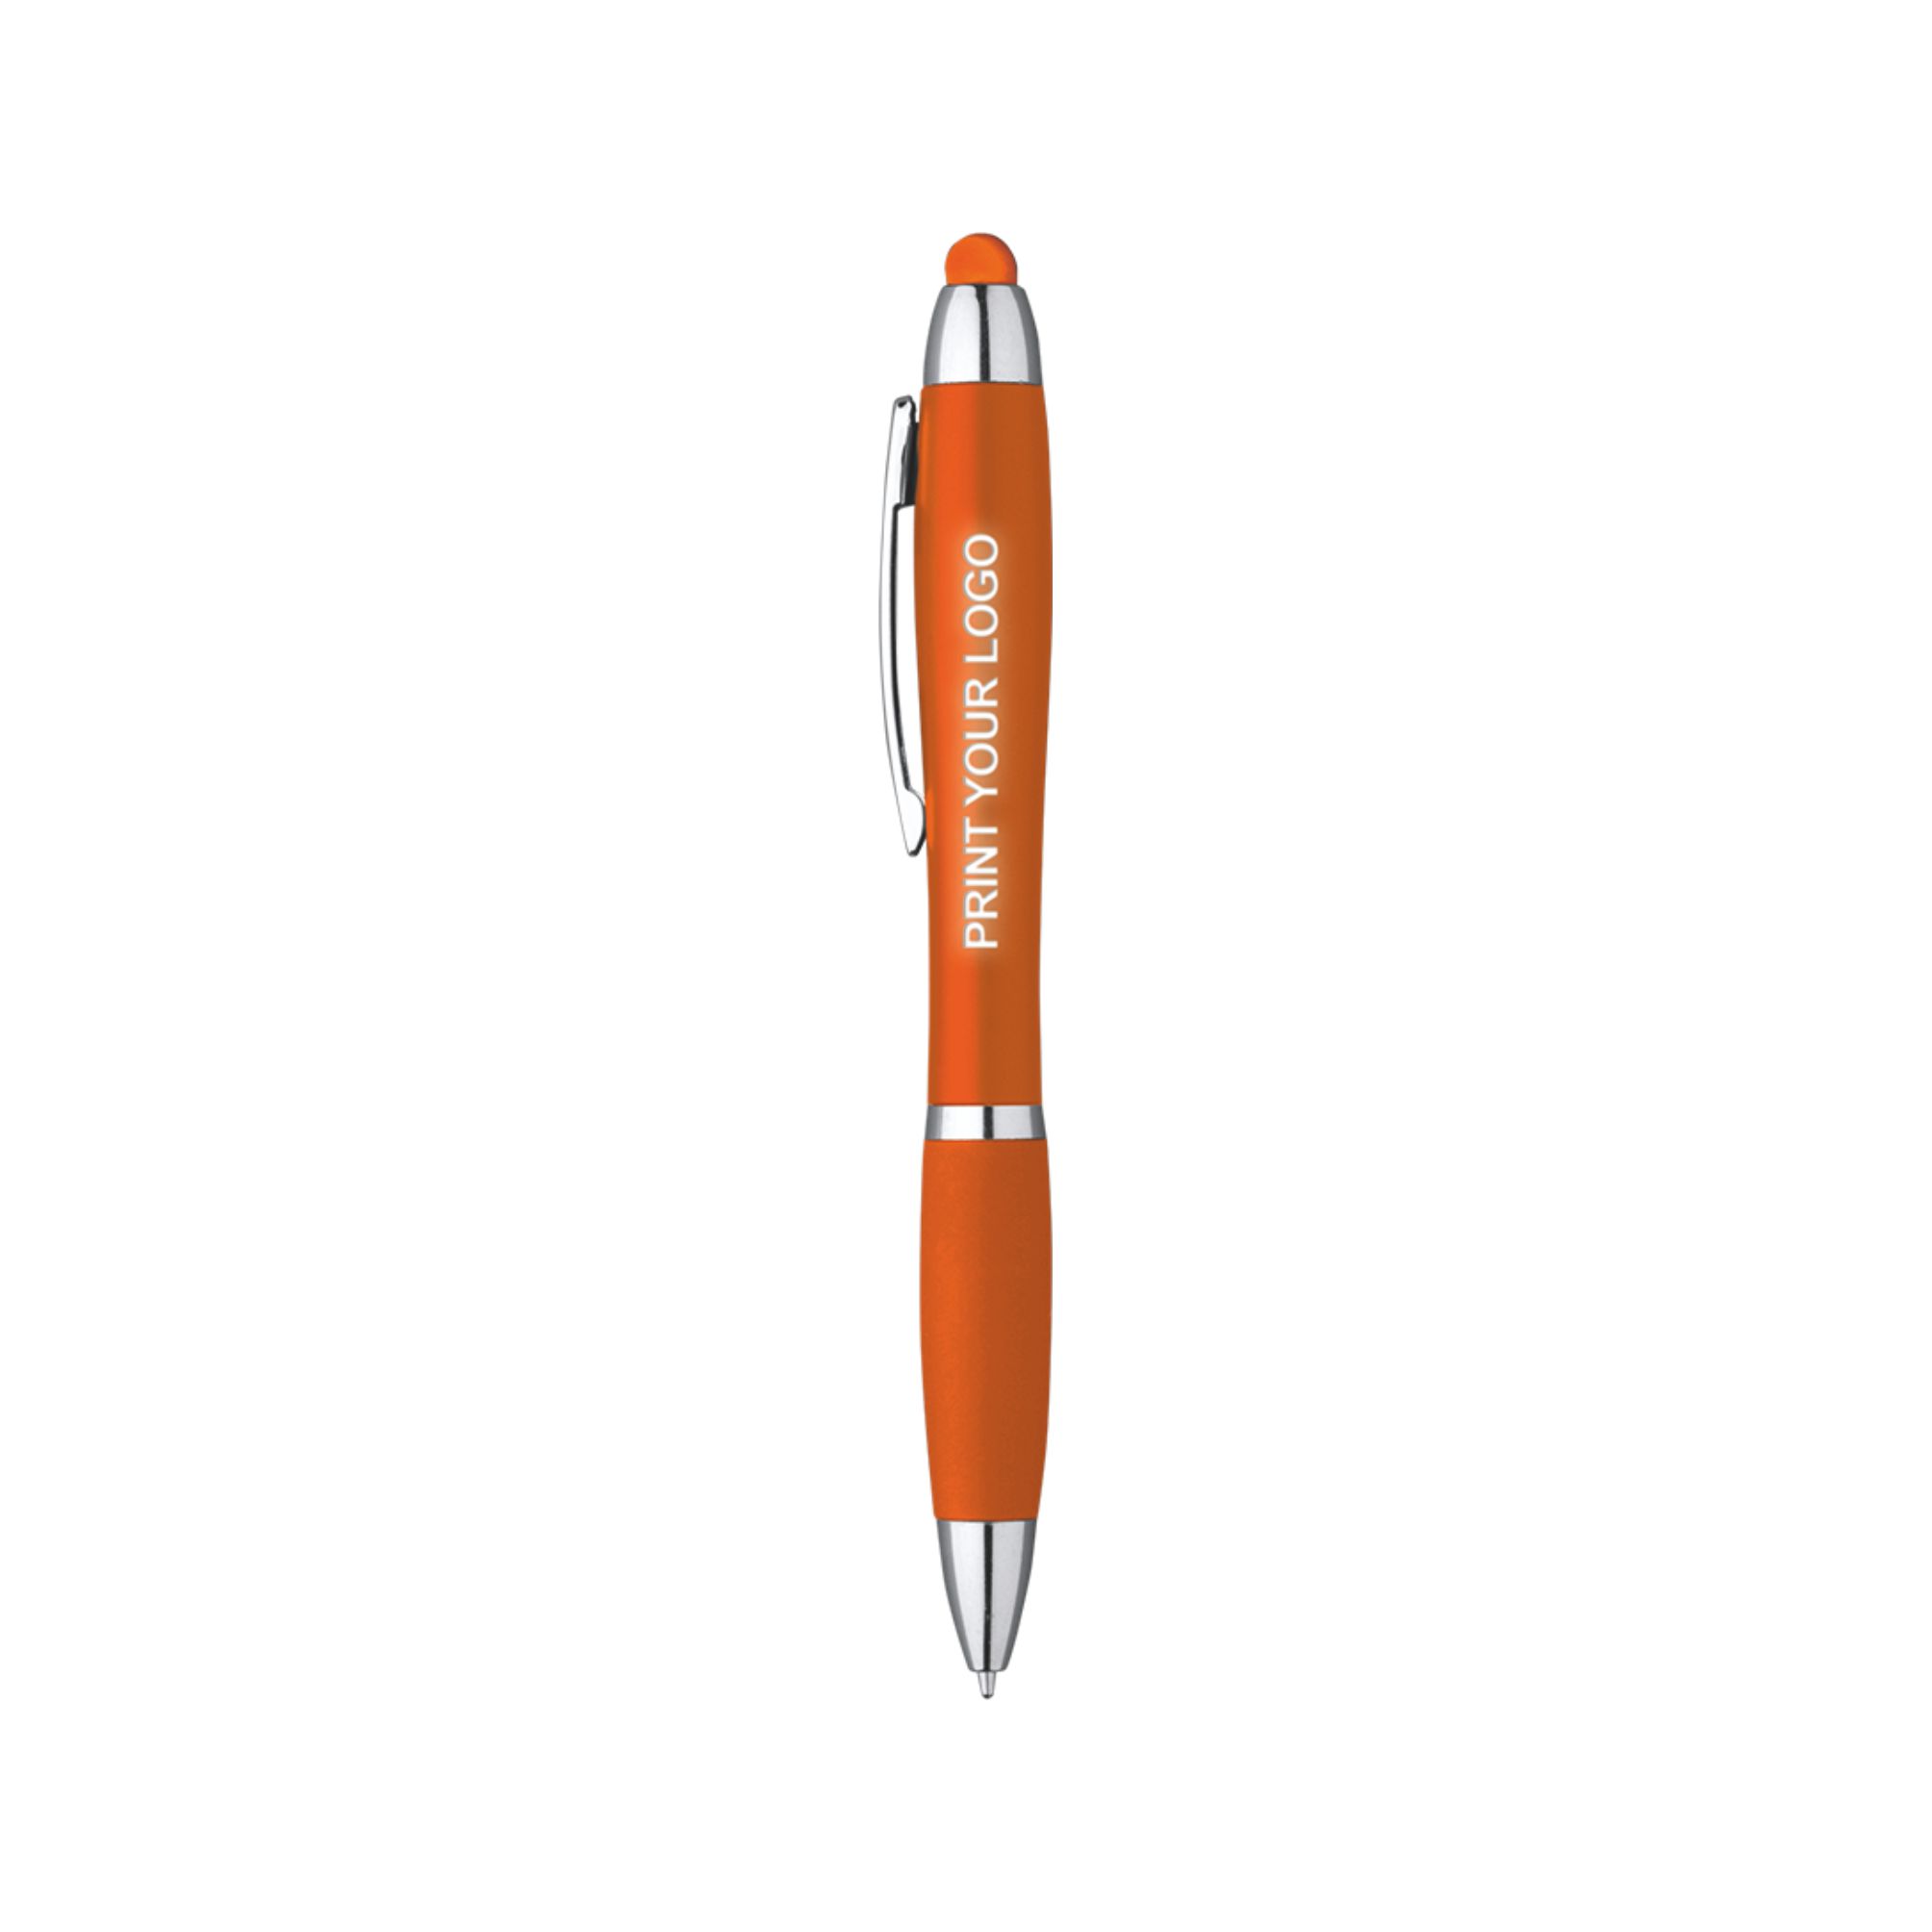 5234-neon-color-penna-sfera-touch-con-led-arancio.jpg